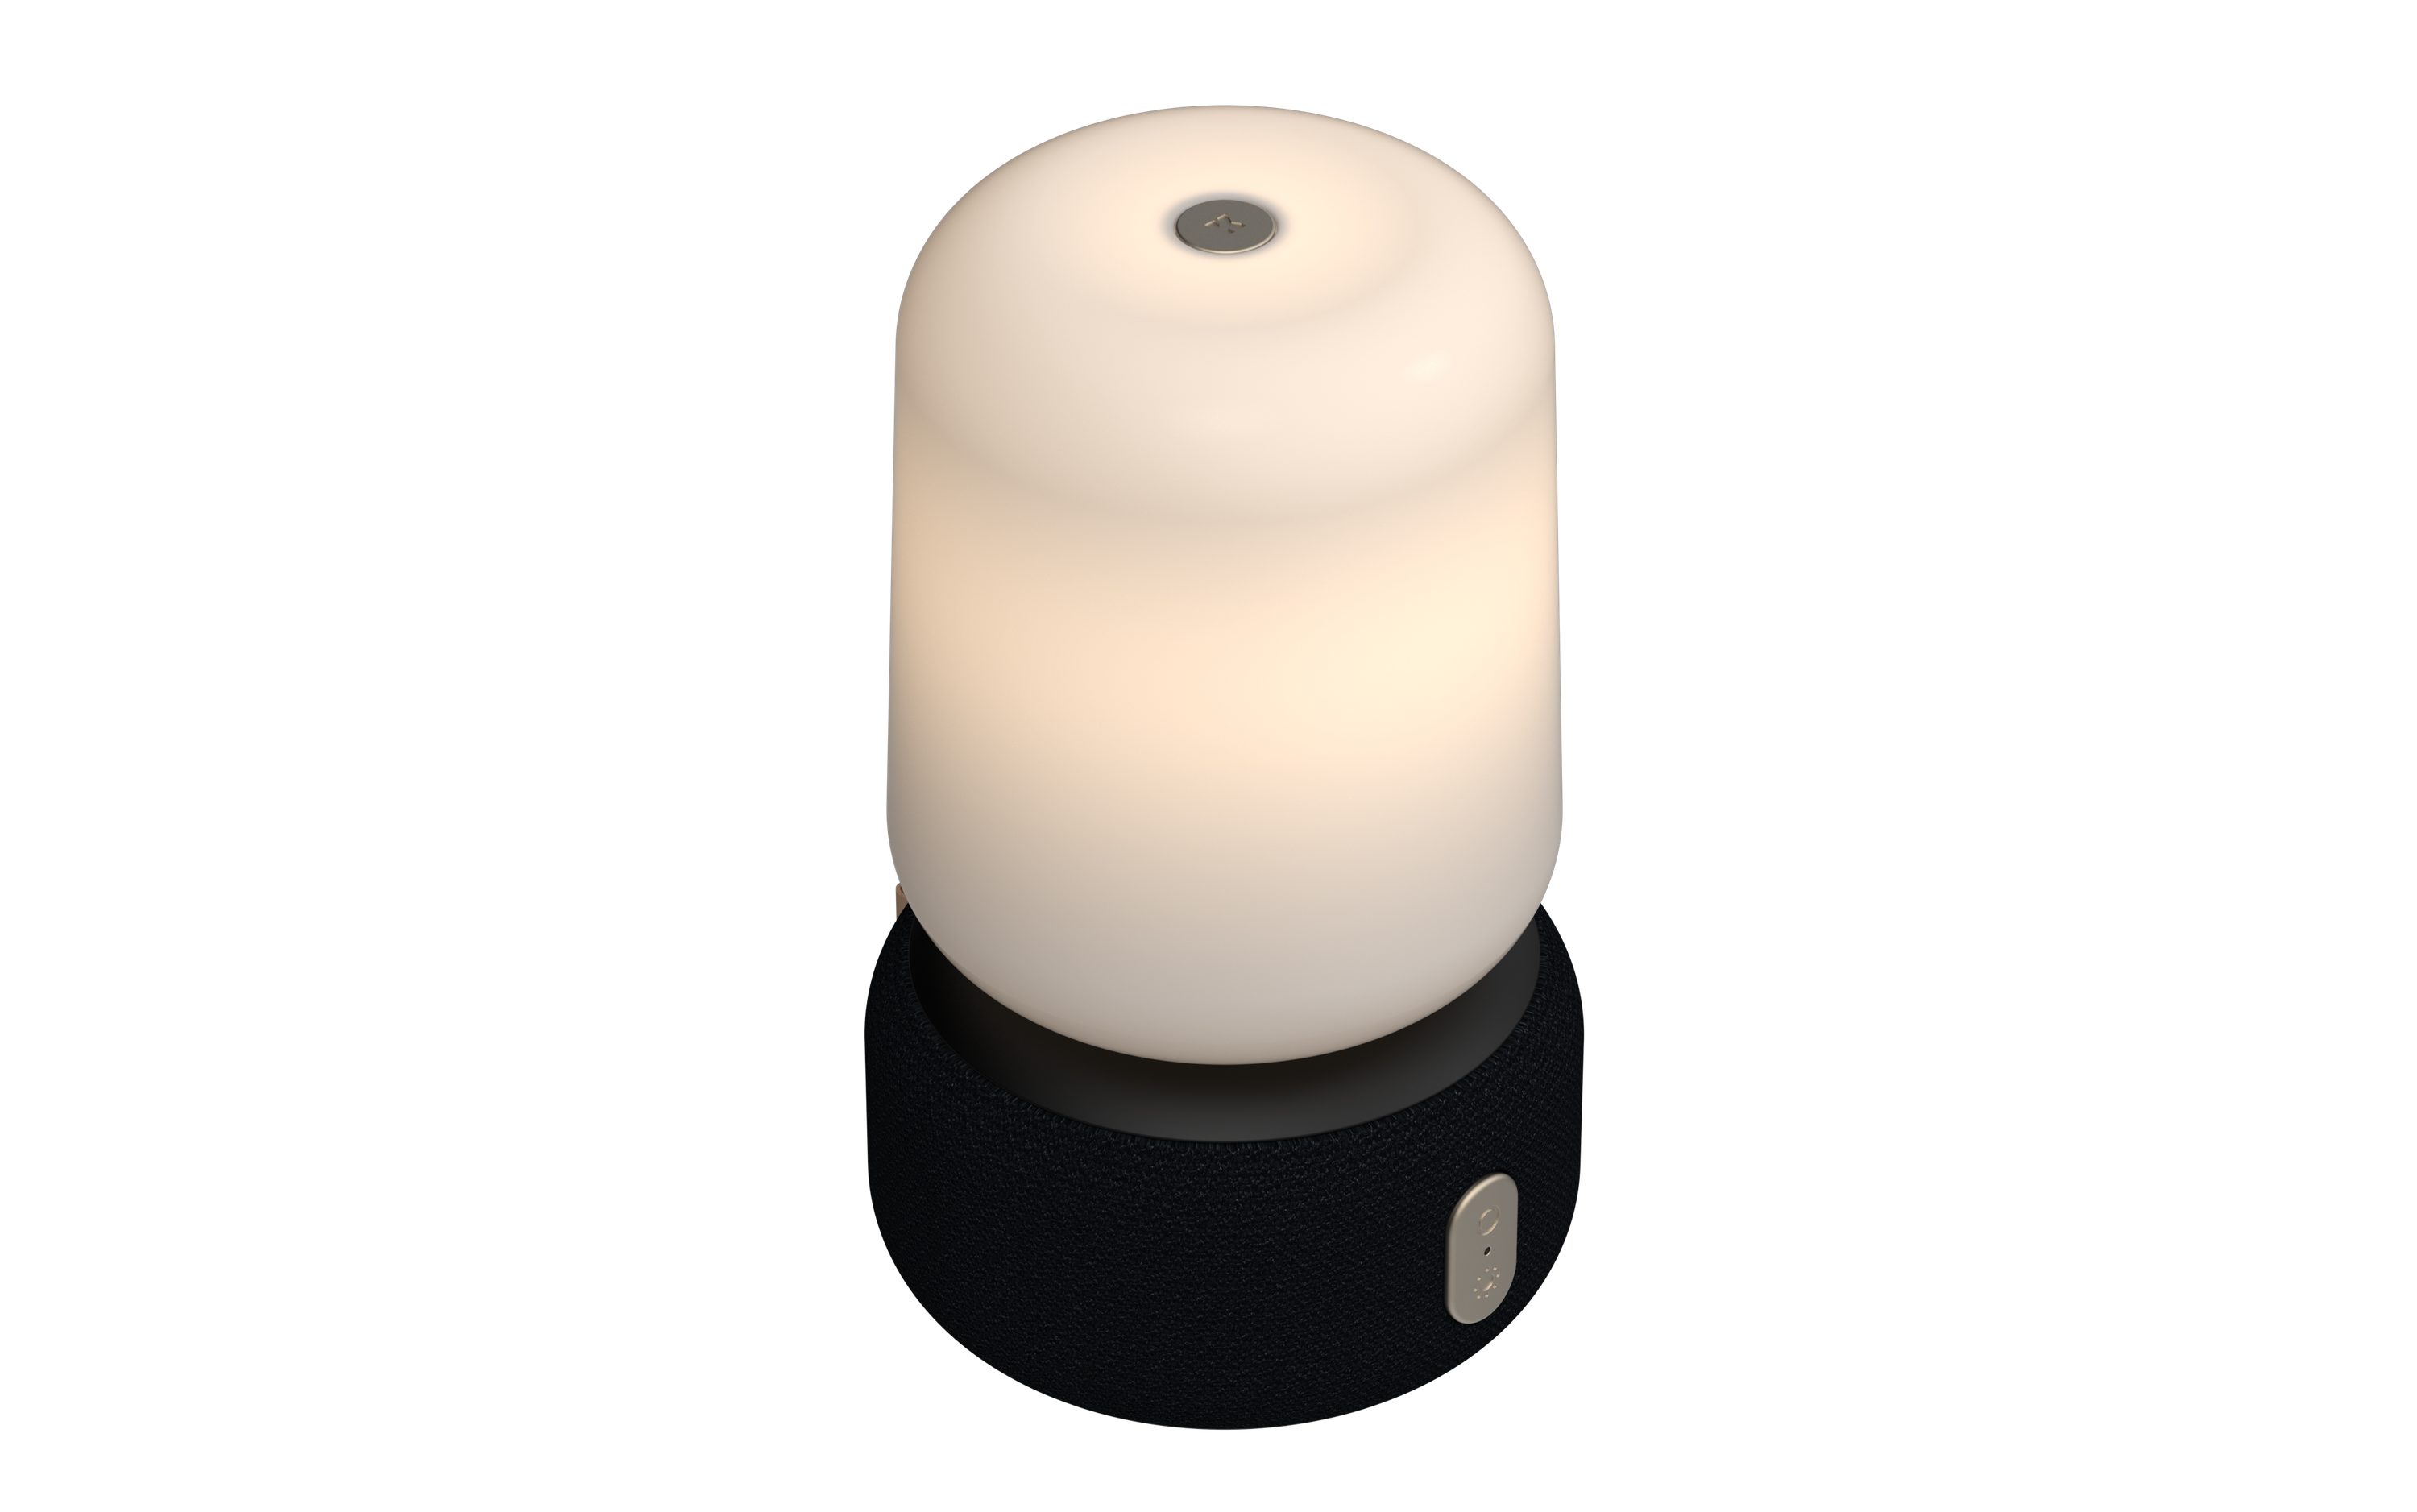 (aLOOMI LED) Lautsprecher Lampe black aLOOMI KREAFUNK Bluetooth und LED und Lampe mit Lautsprecher mit Lautsprecher Bluetooth